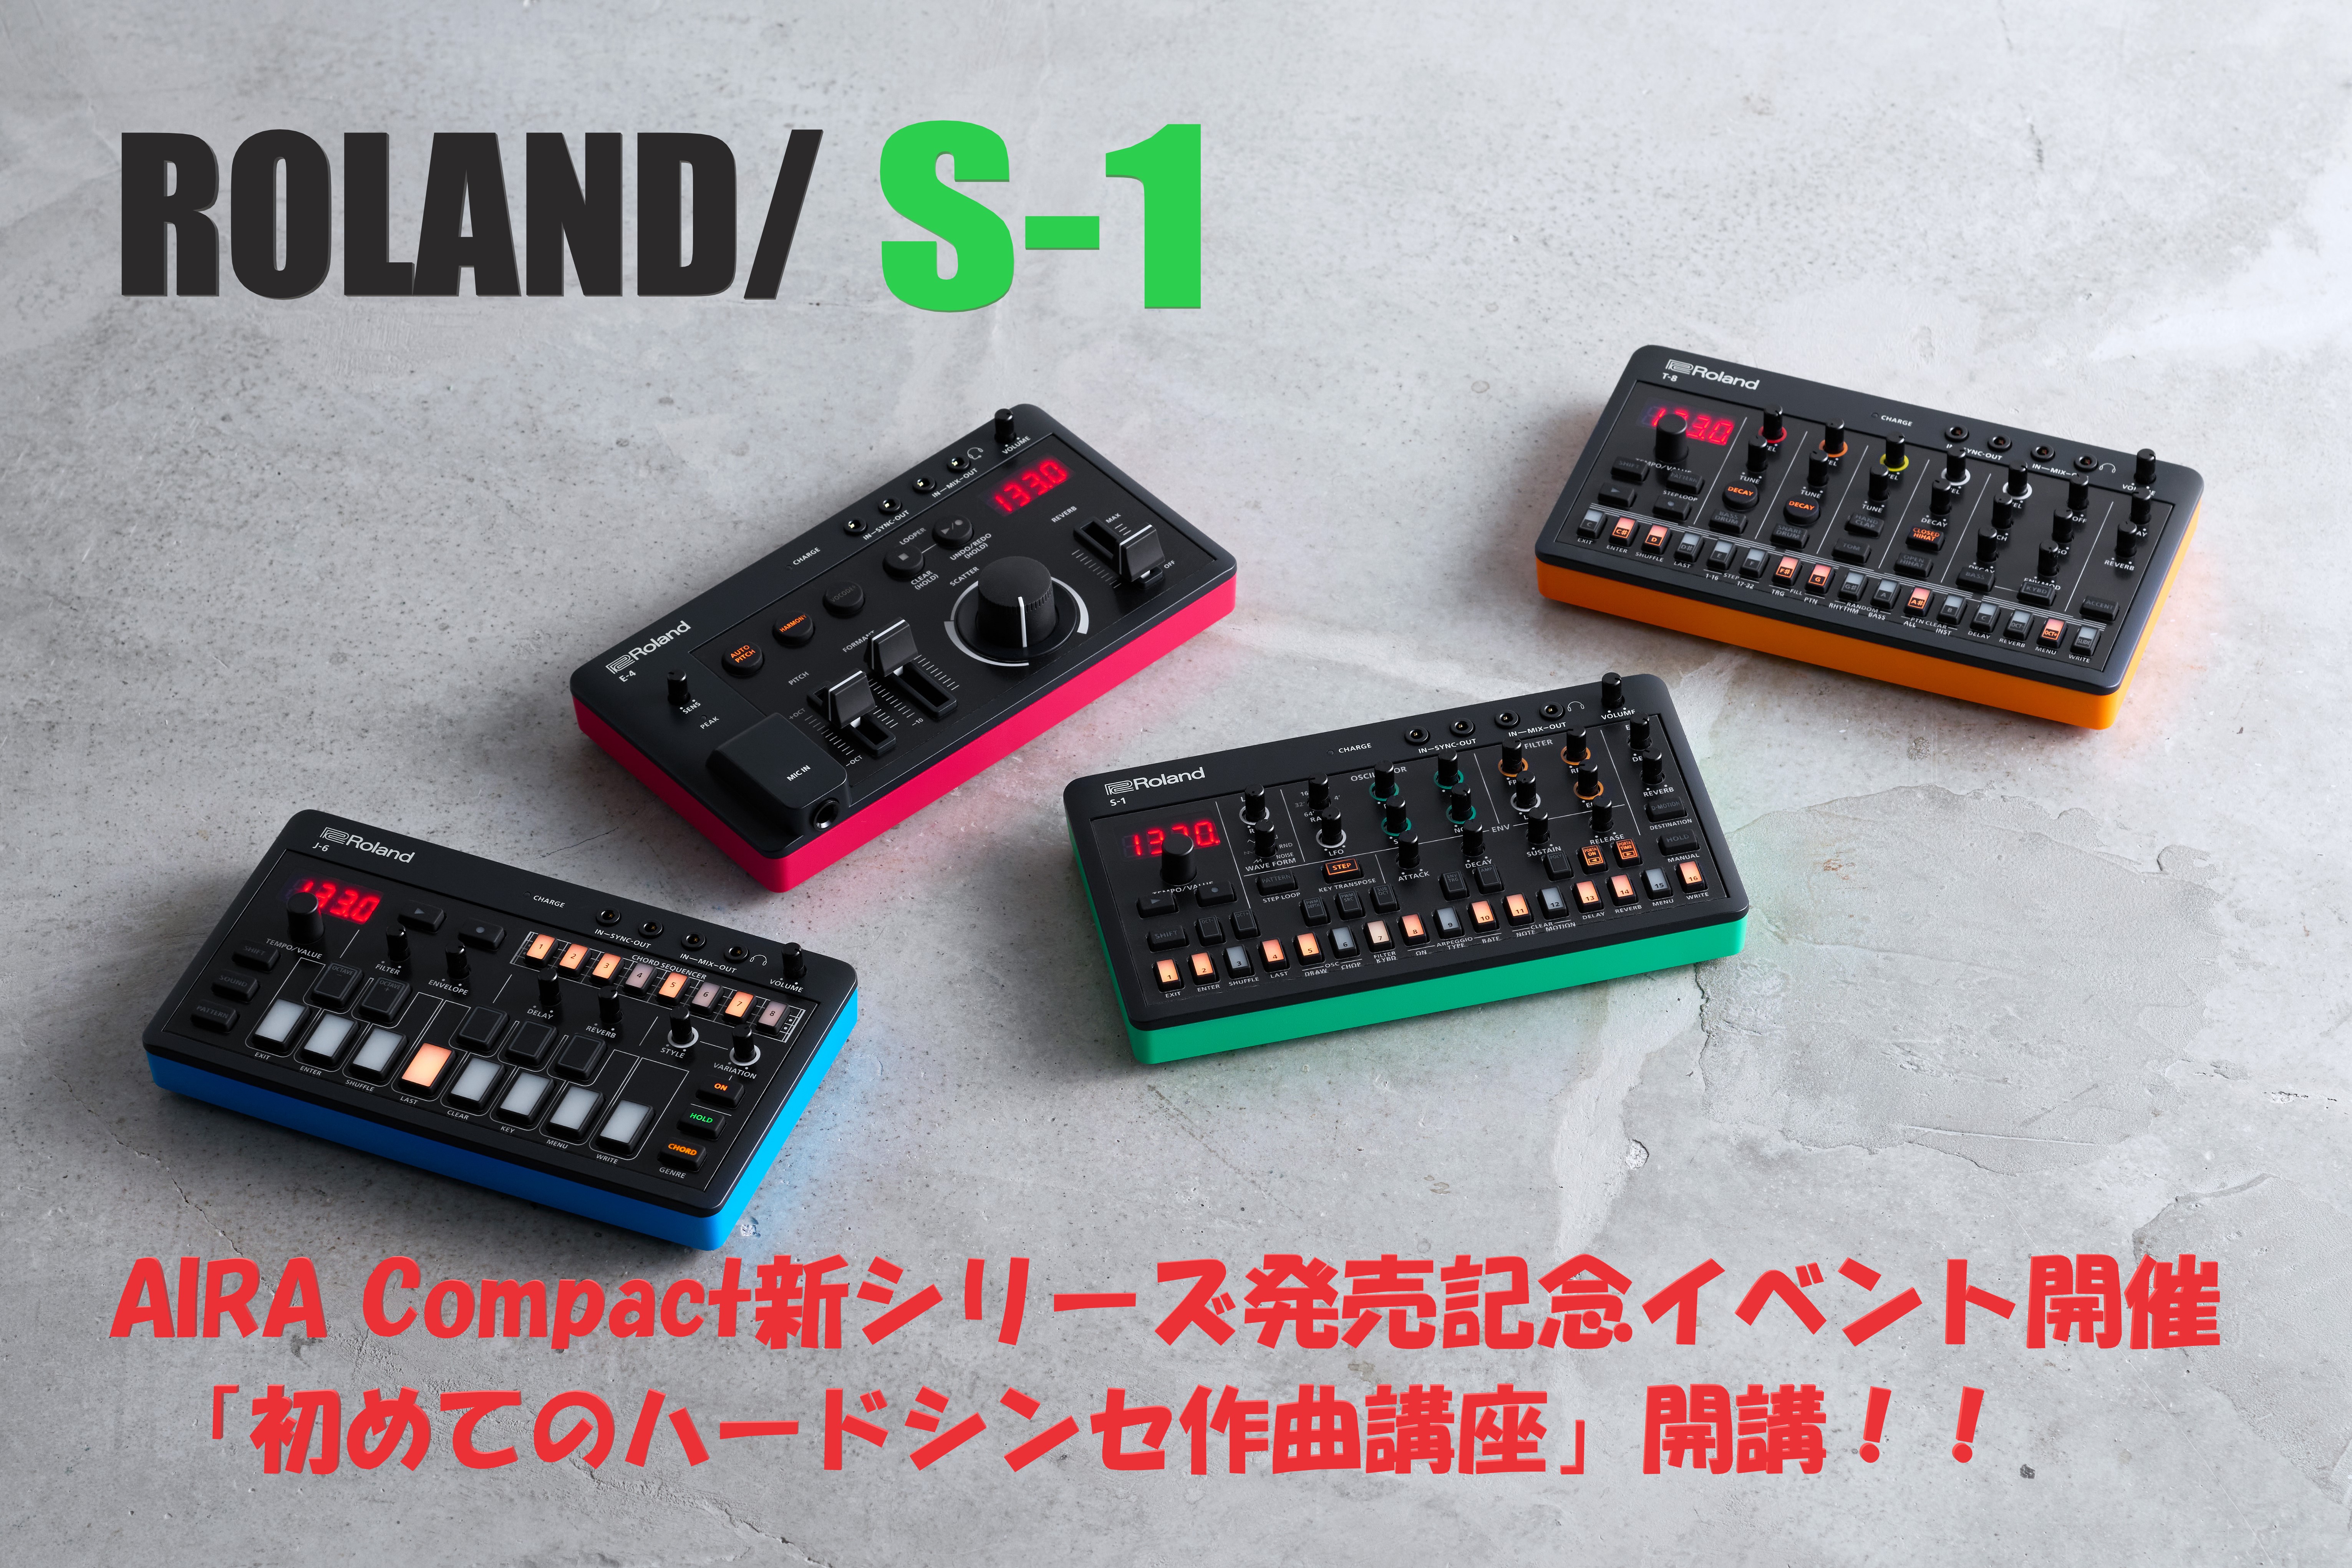 Roland/S-1【AIRA Compact】新シリーズ発売記念イベント開催 ...